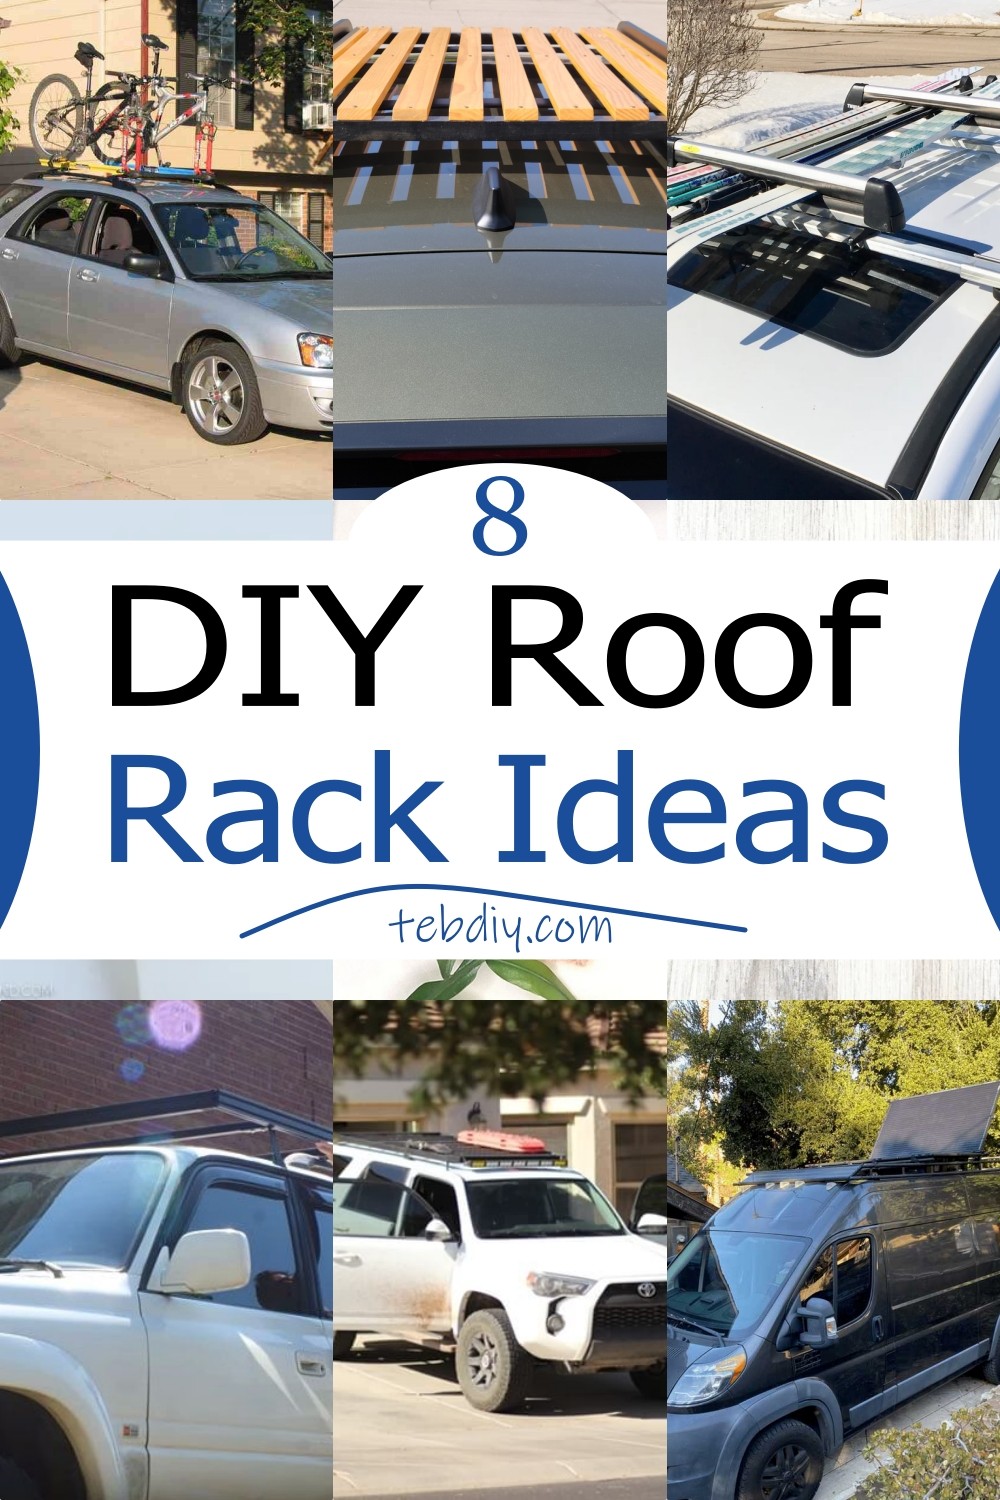 DIY Roof Rack Ideas